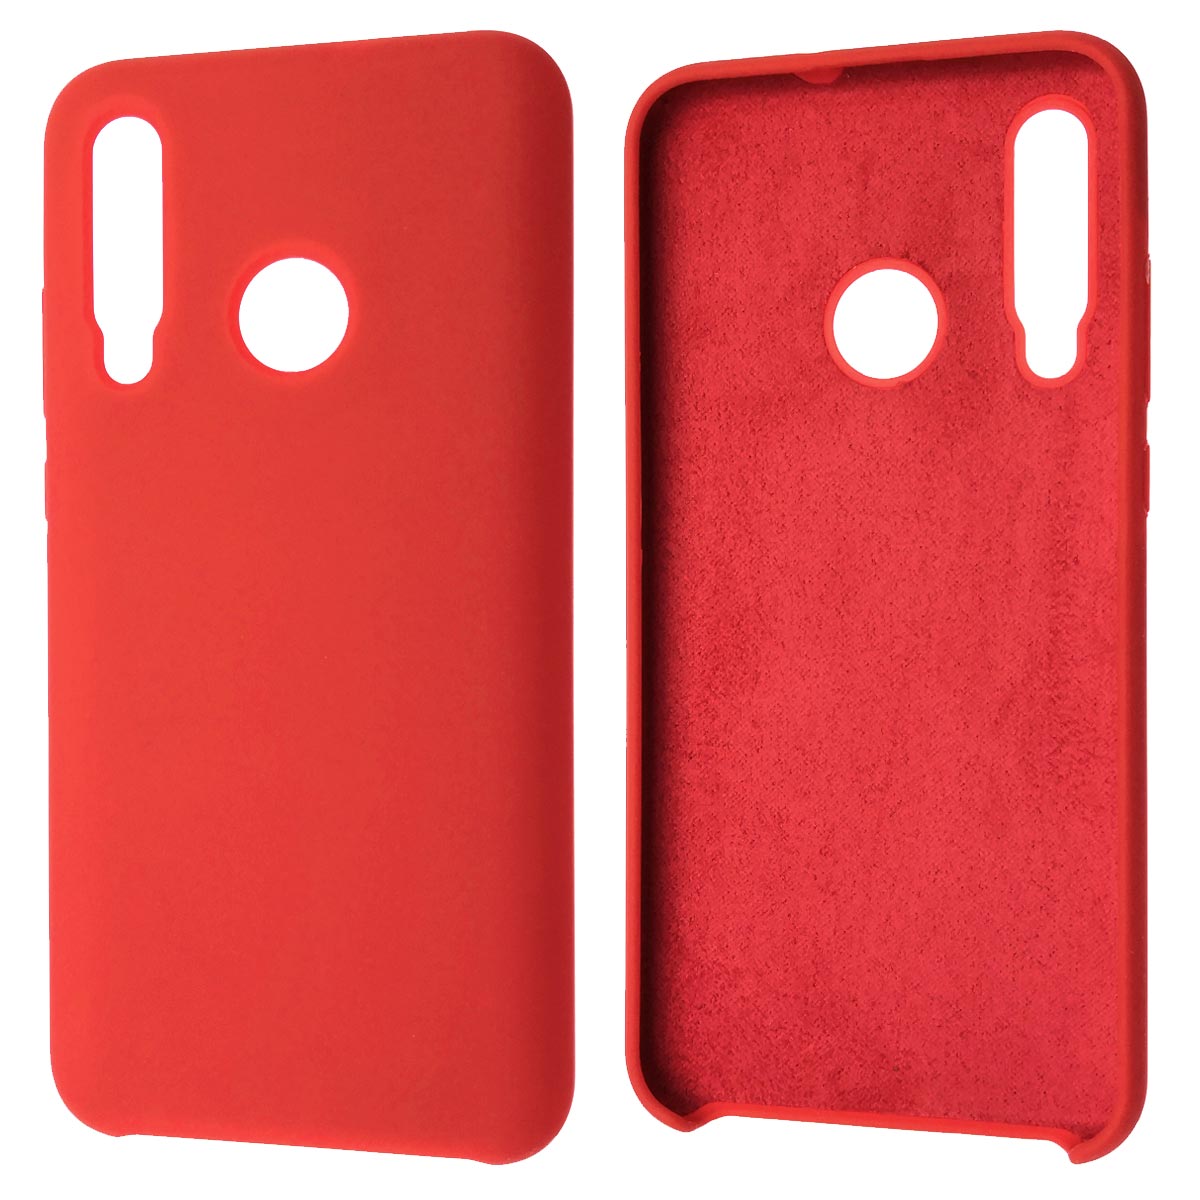 Чехол накладка Silicon Cover для HUAWEI Honor 10i, силикон, бархат, цвет красный